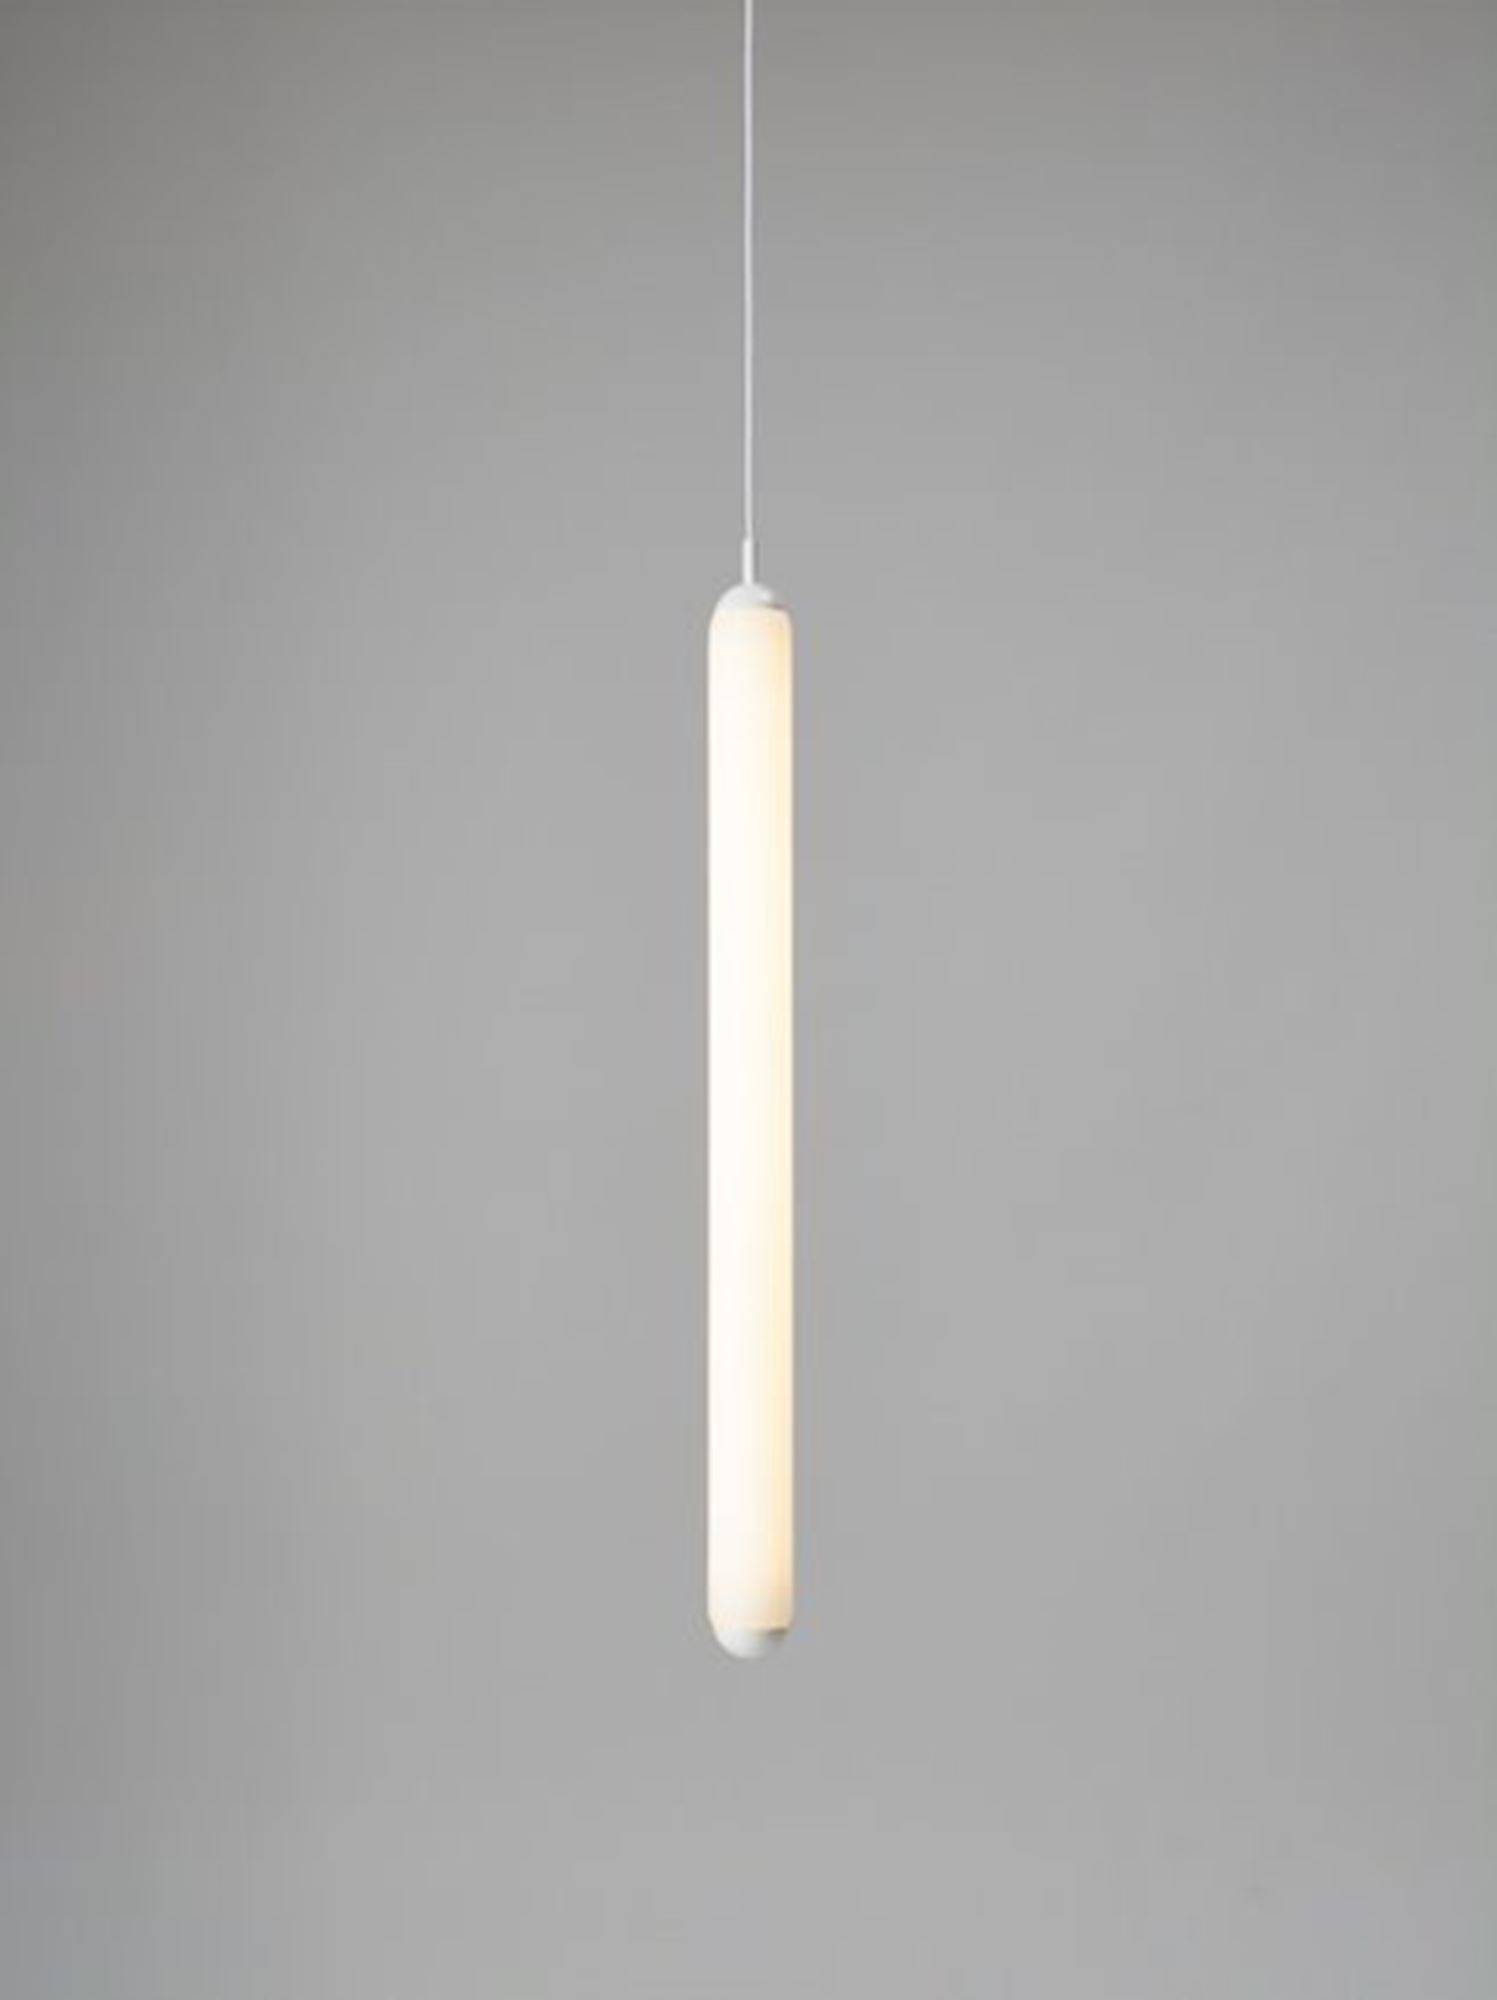 Brokis :: Lampa wisząca Puro Solo Vertical srebrna wys. 103 cm